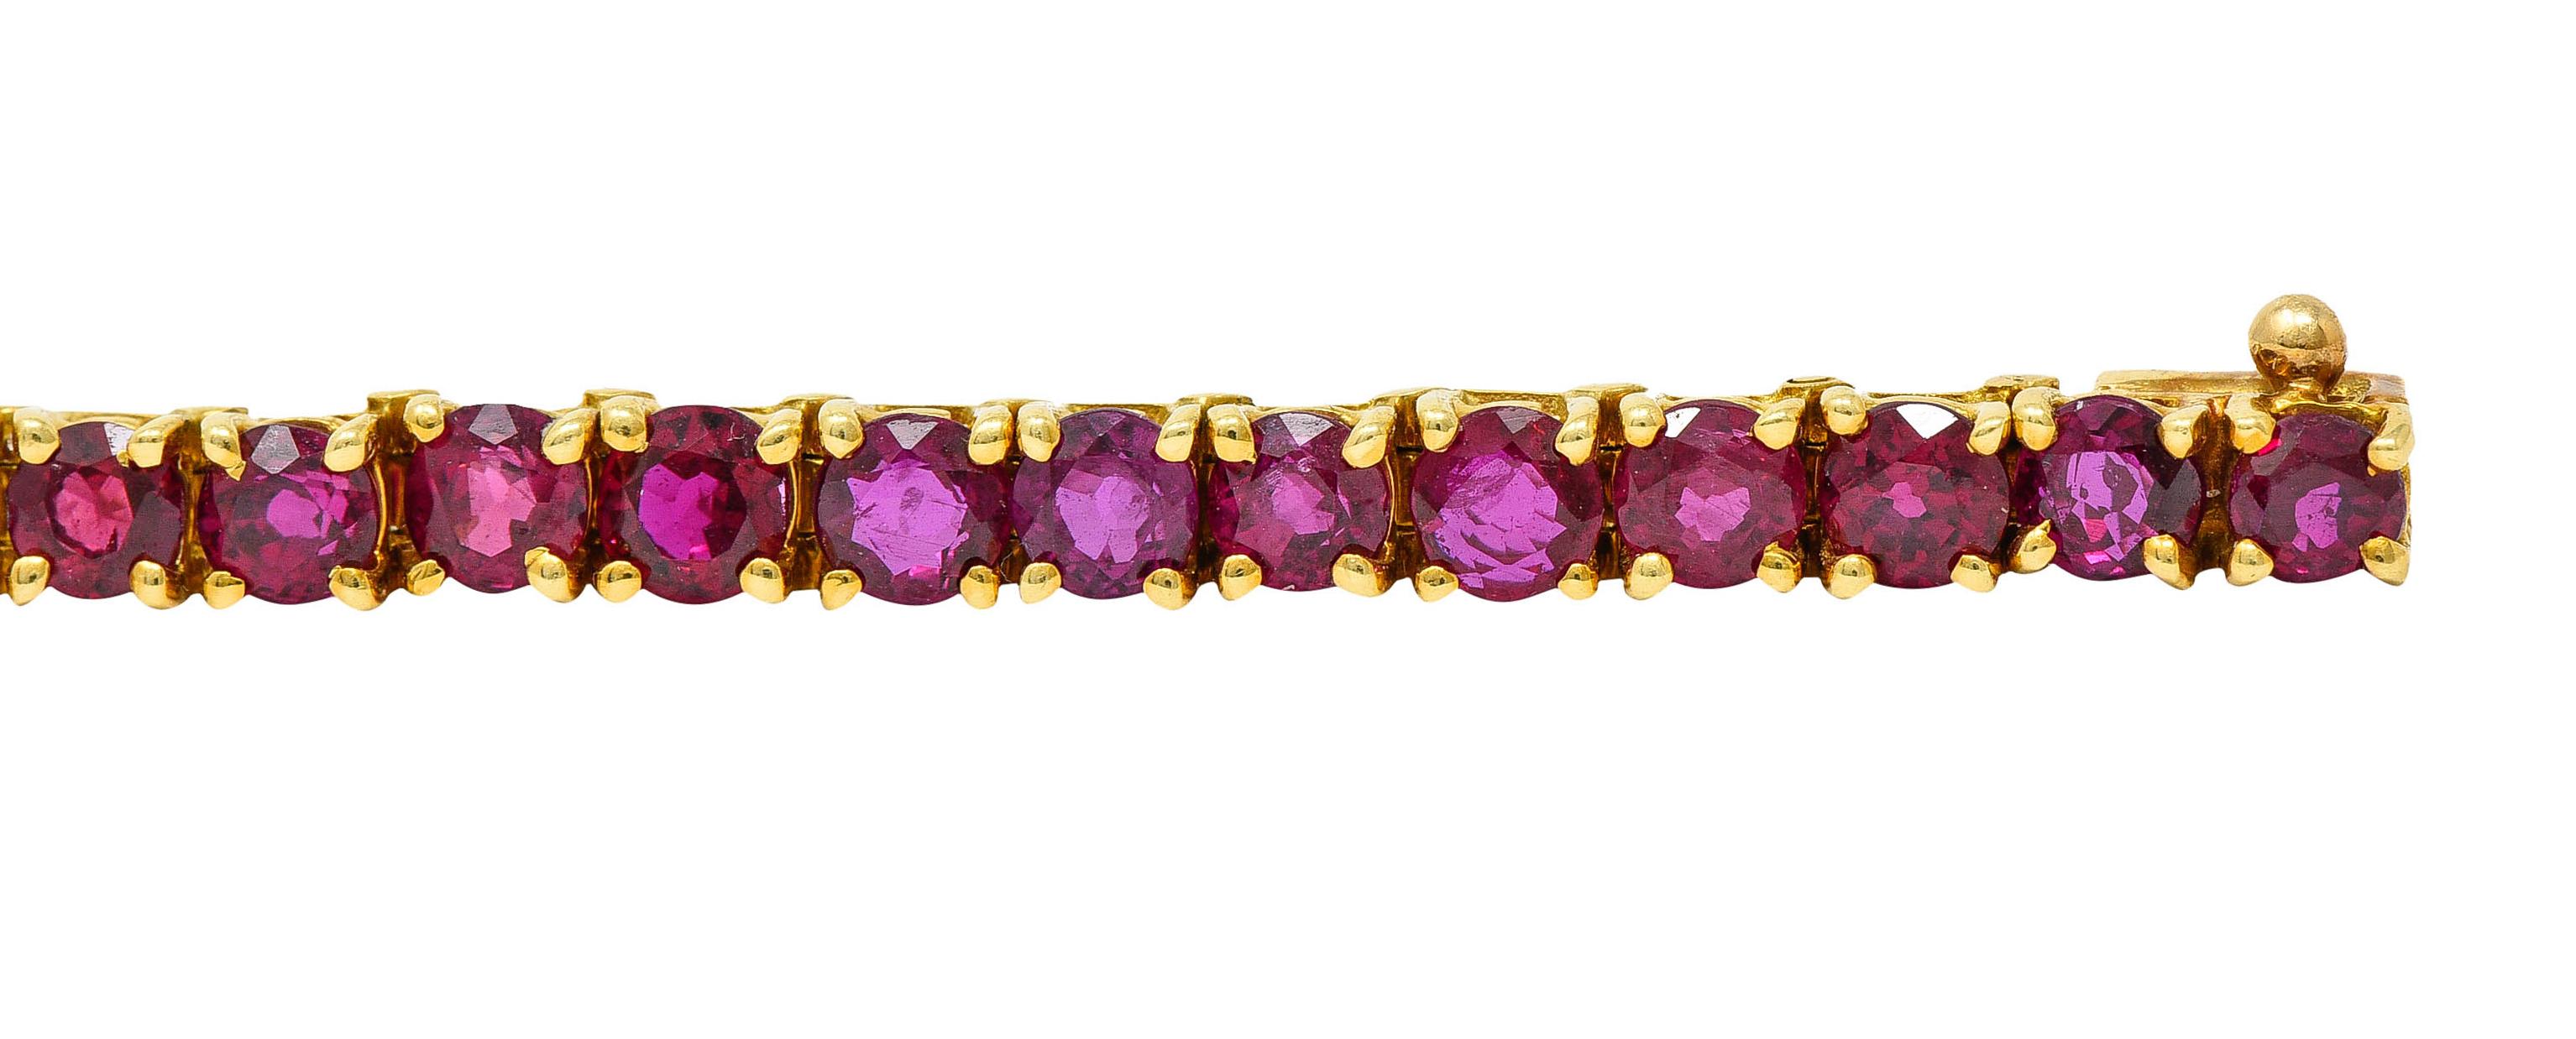 Contemporary Van Cleef & Arpels 7.50 Carats Ruby 18 Karat Gold Line Bracelet 1970's Vintage